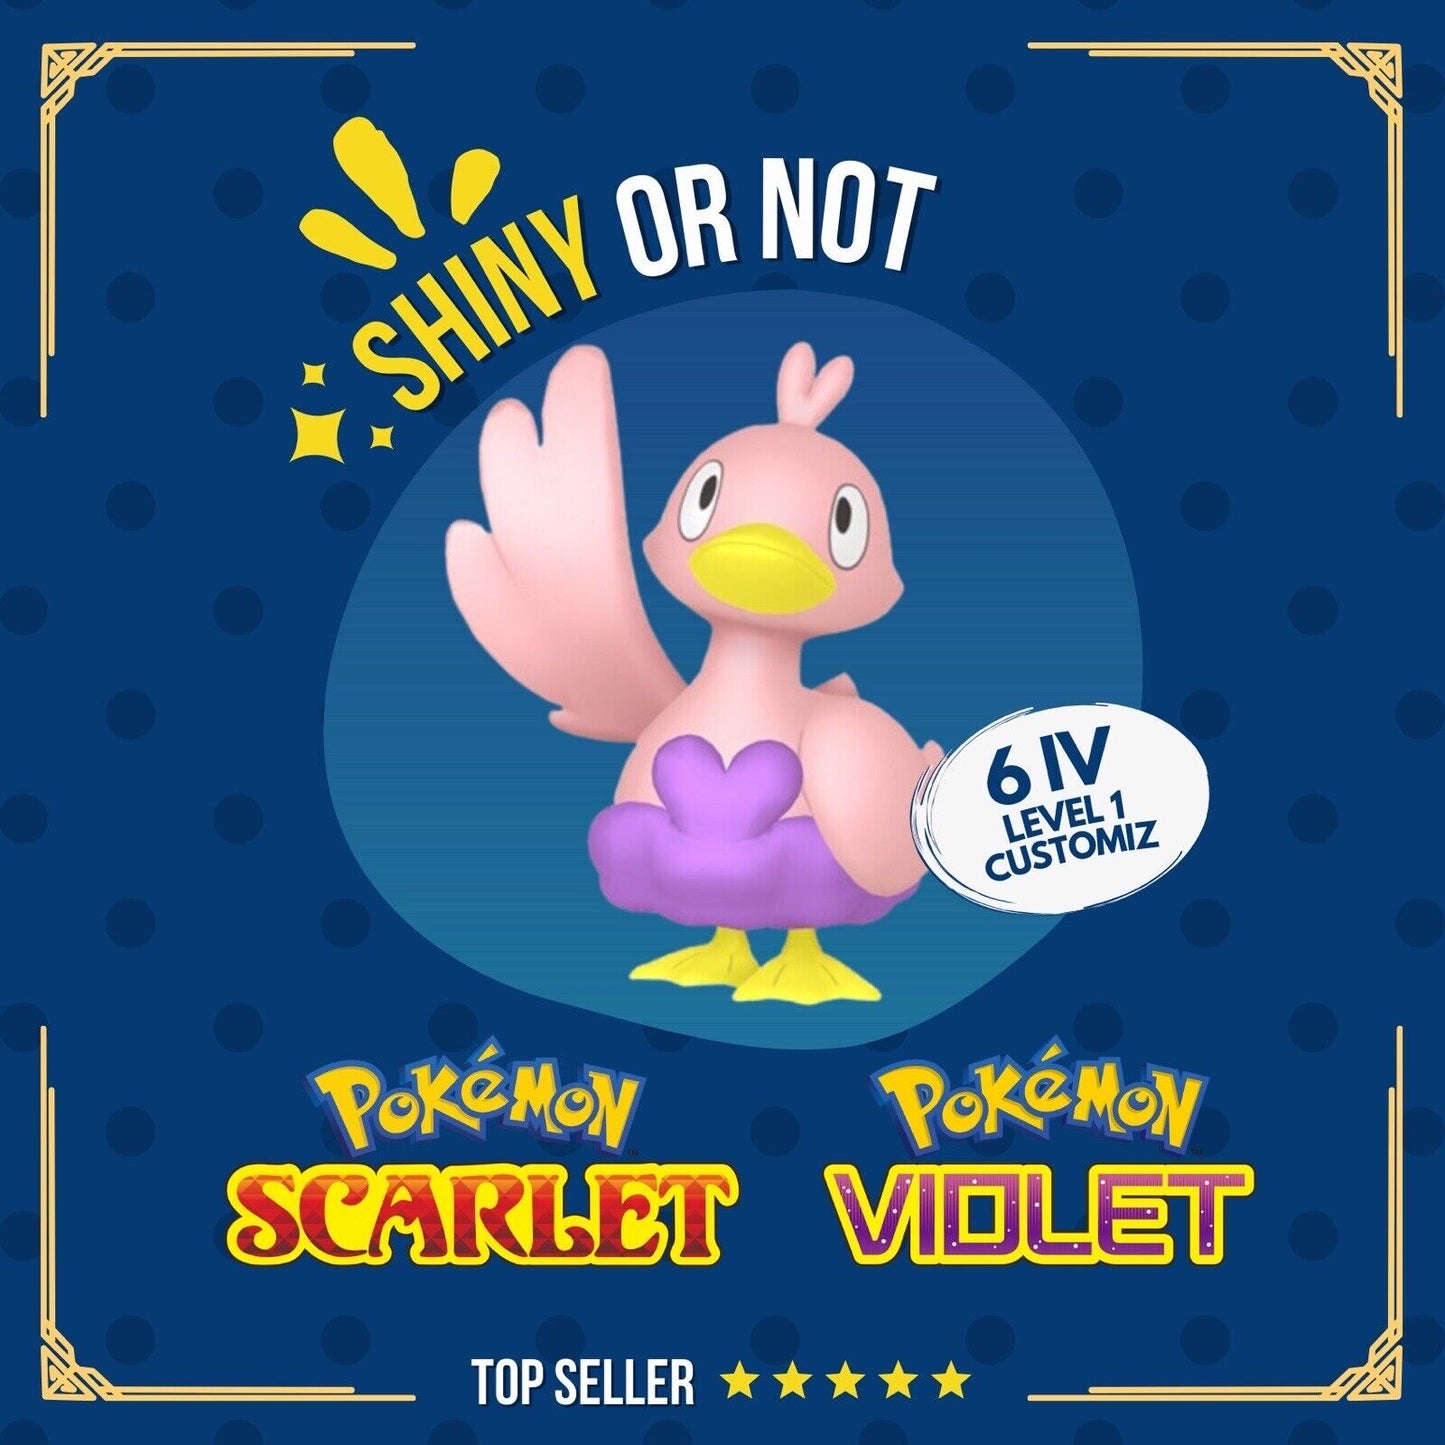 Ducklett Shiny or Non ✨ 6 IV Customizable Nature Level OT Pokémon Scarlet Violet by Shiny Living Dex | Shiny Living Dex